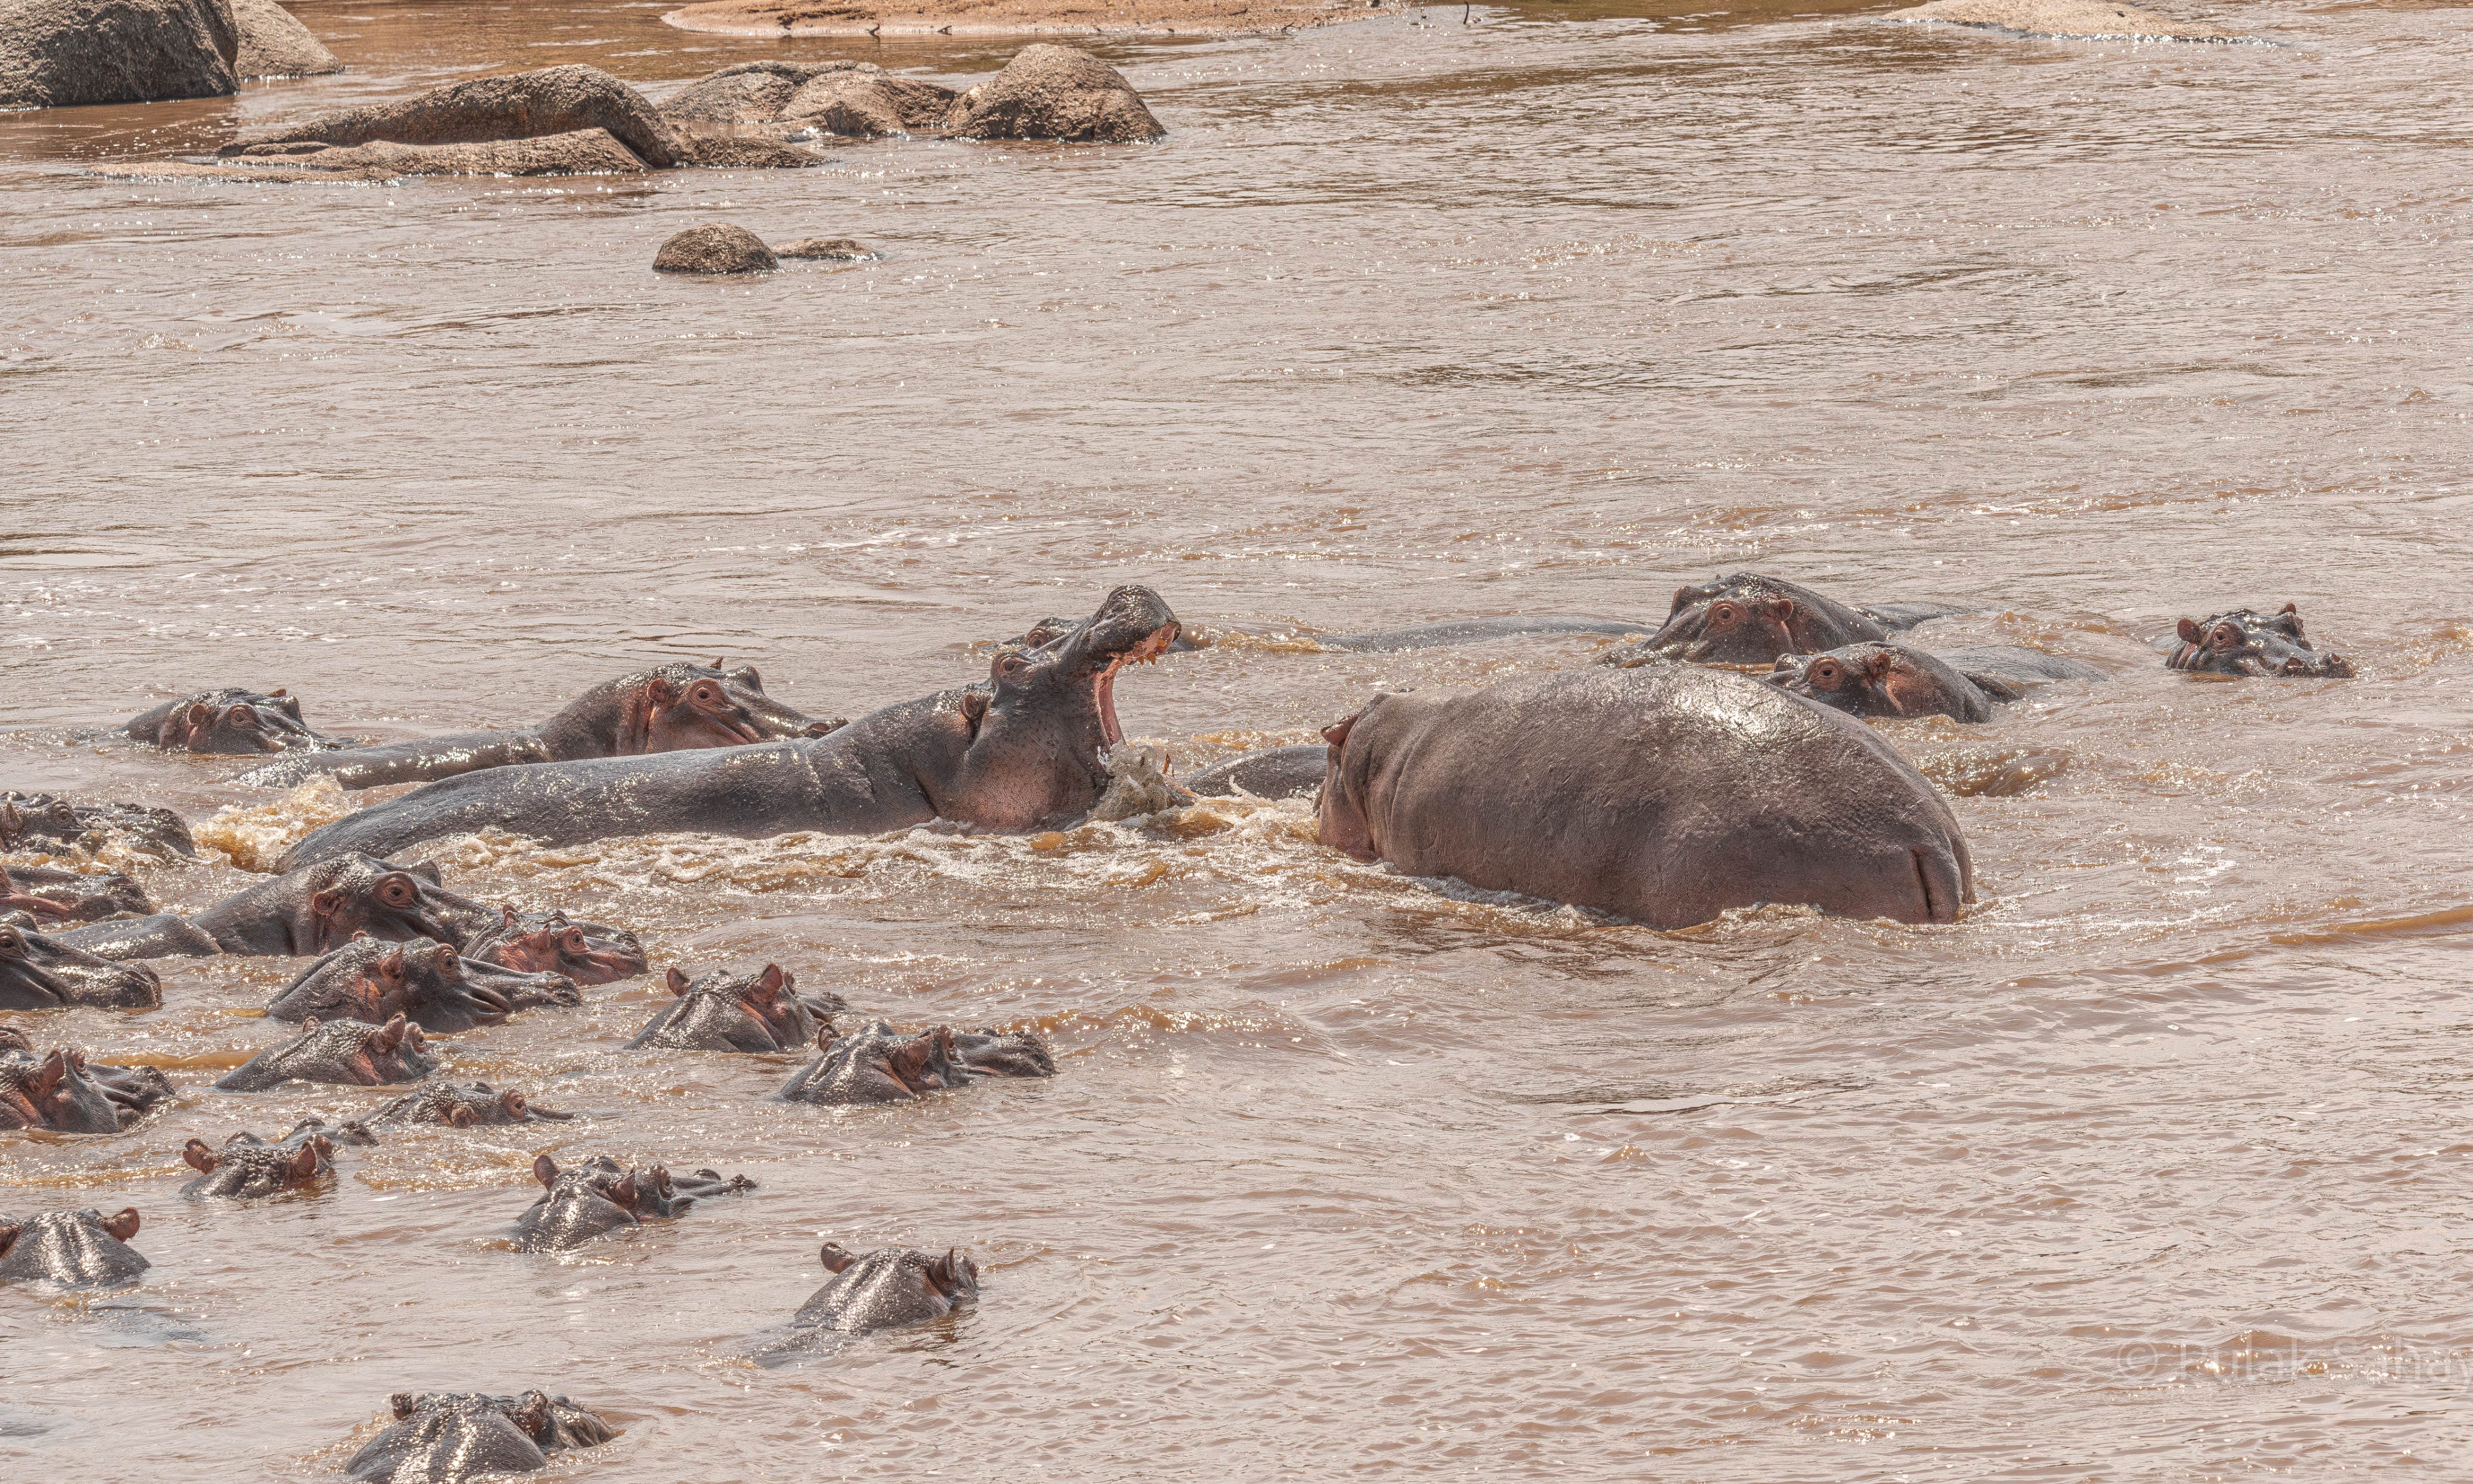 Hippo establishing territory